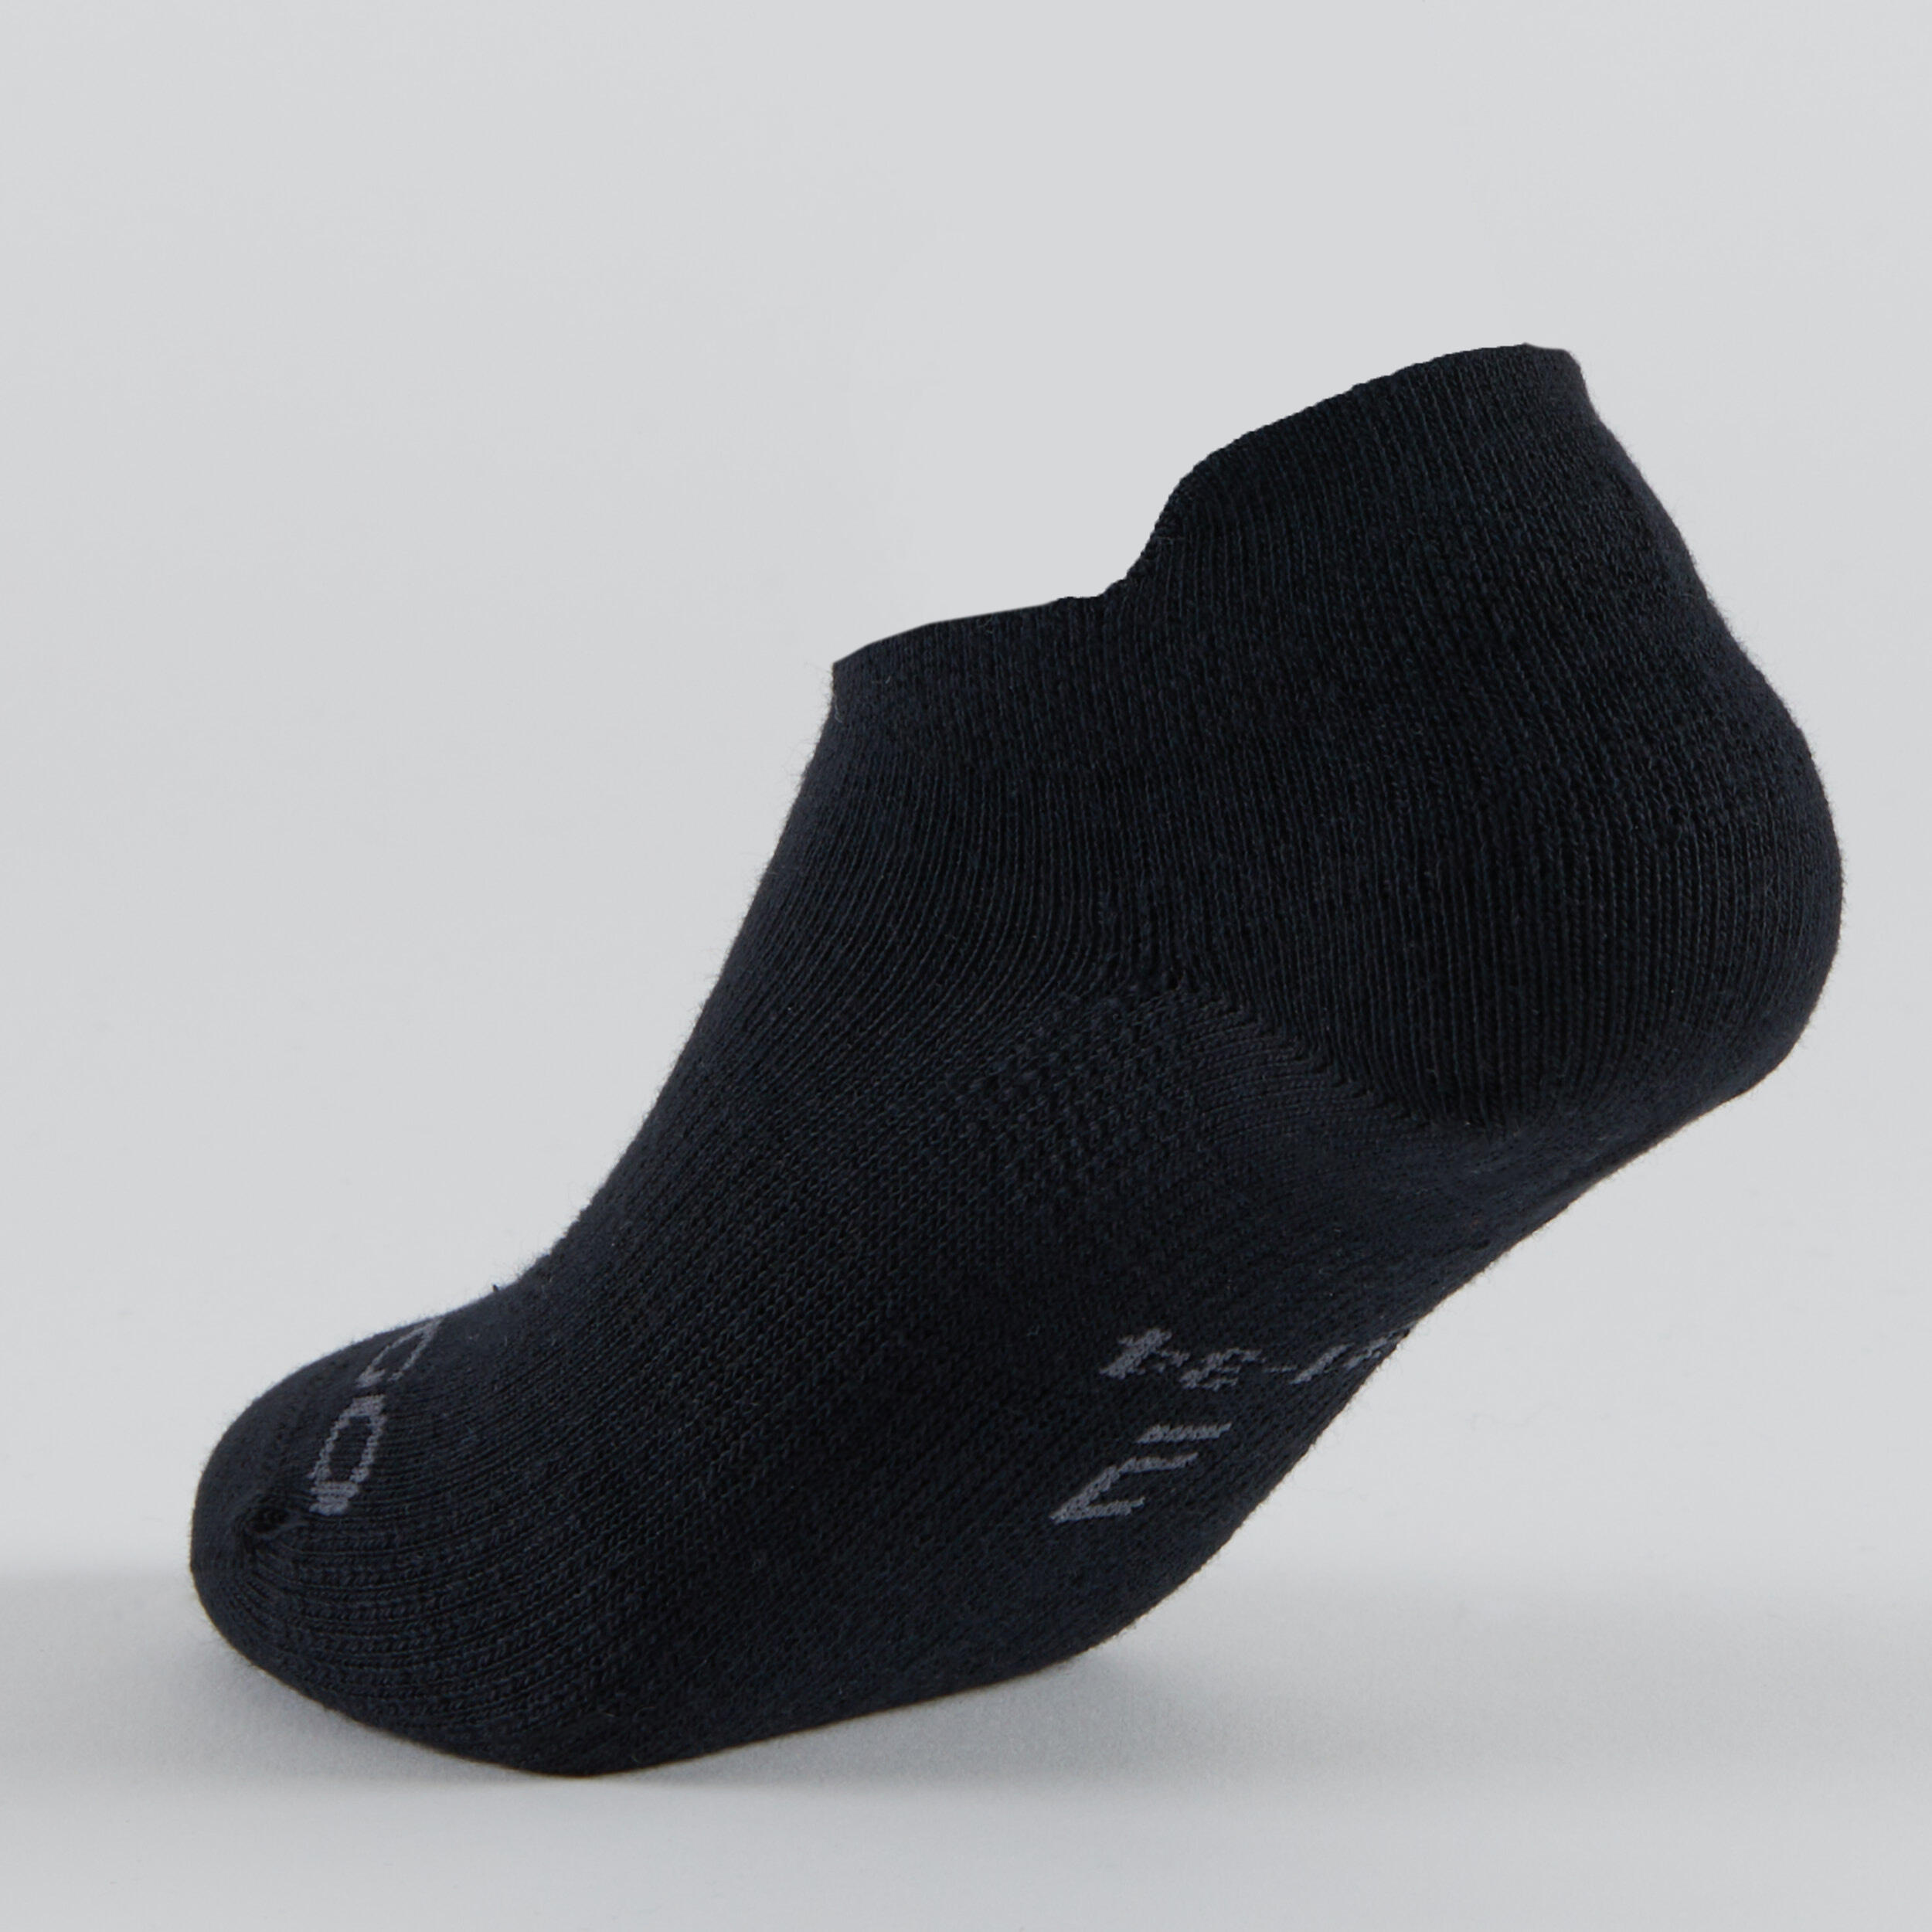 Kids' Low-Cut Tennis Socks Tri-Pack RS 160 - Black/Black/Grey 4/8